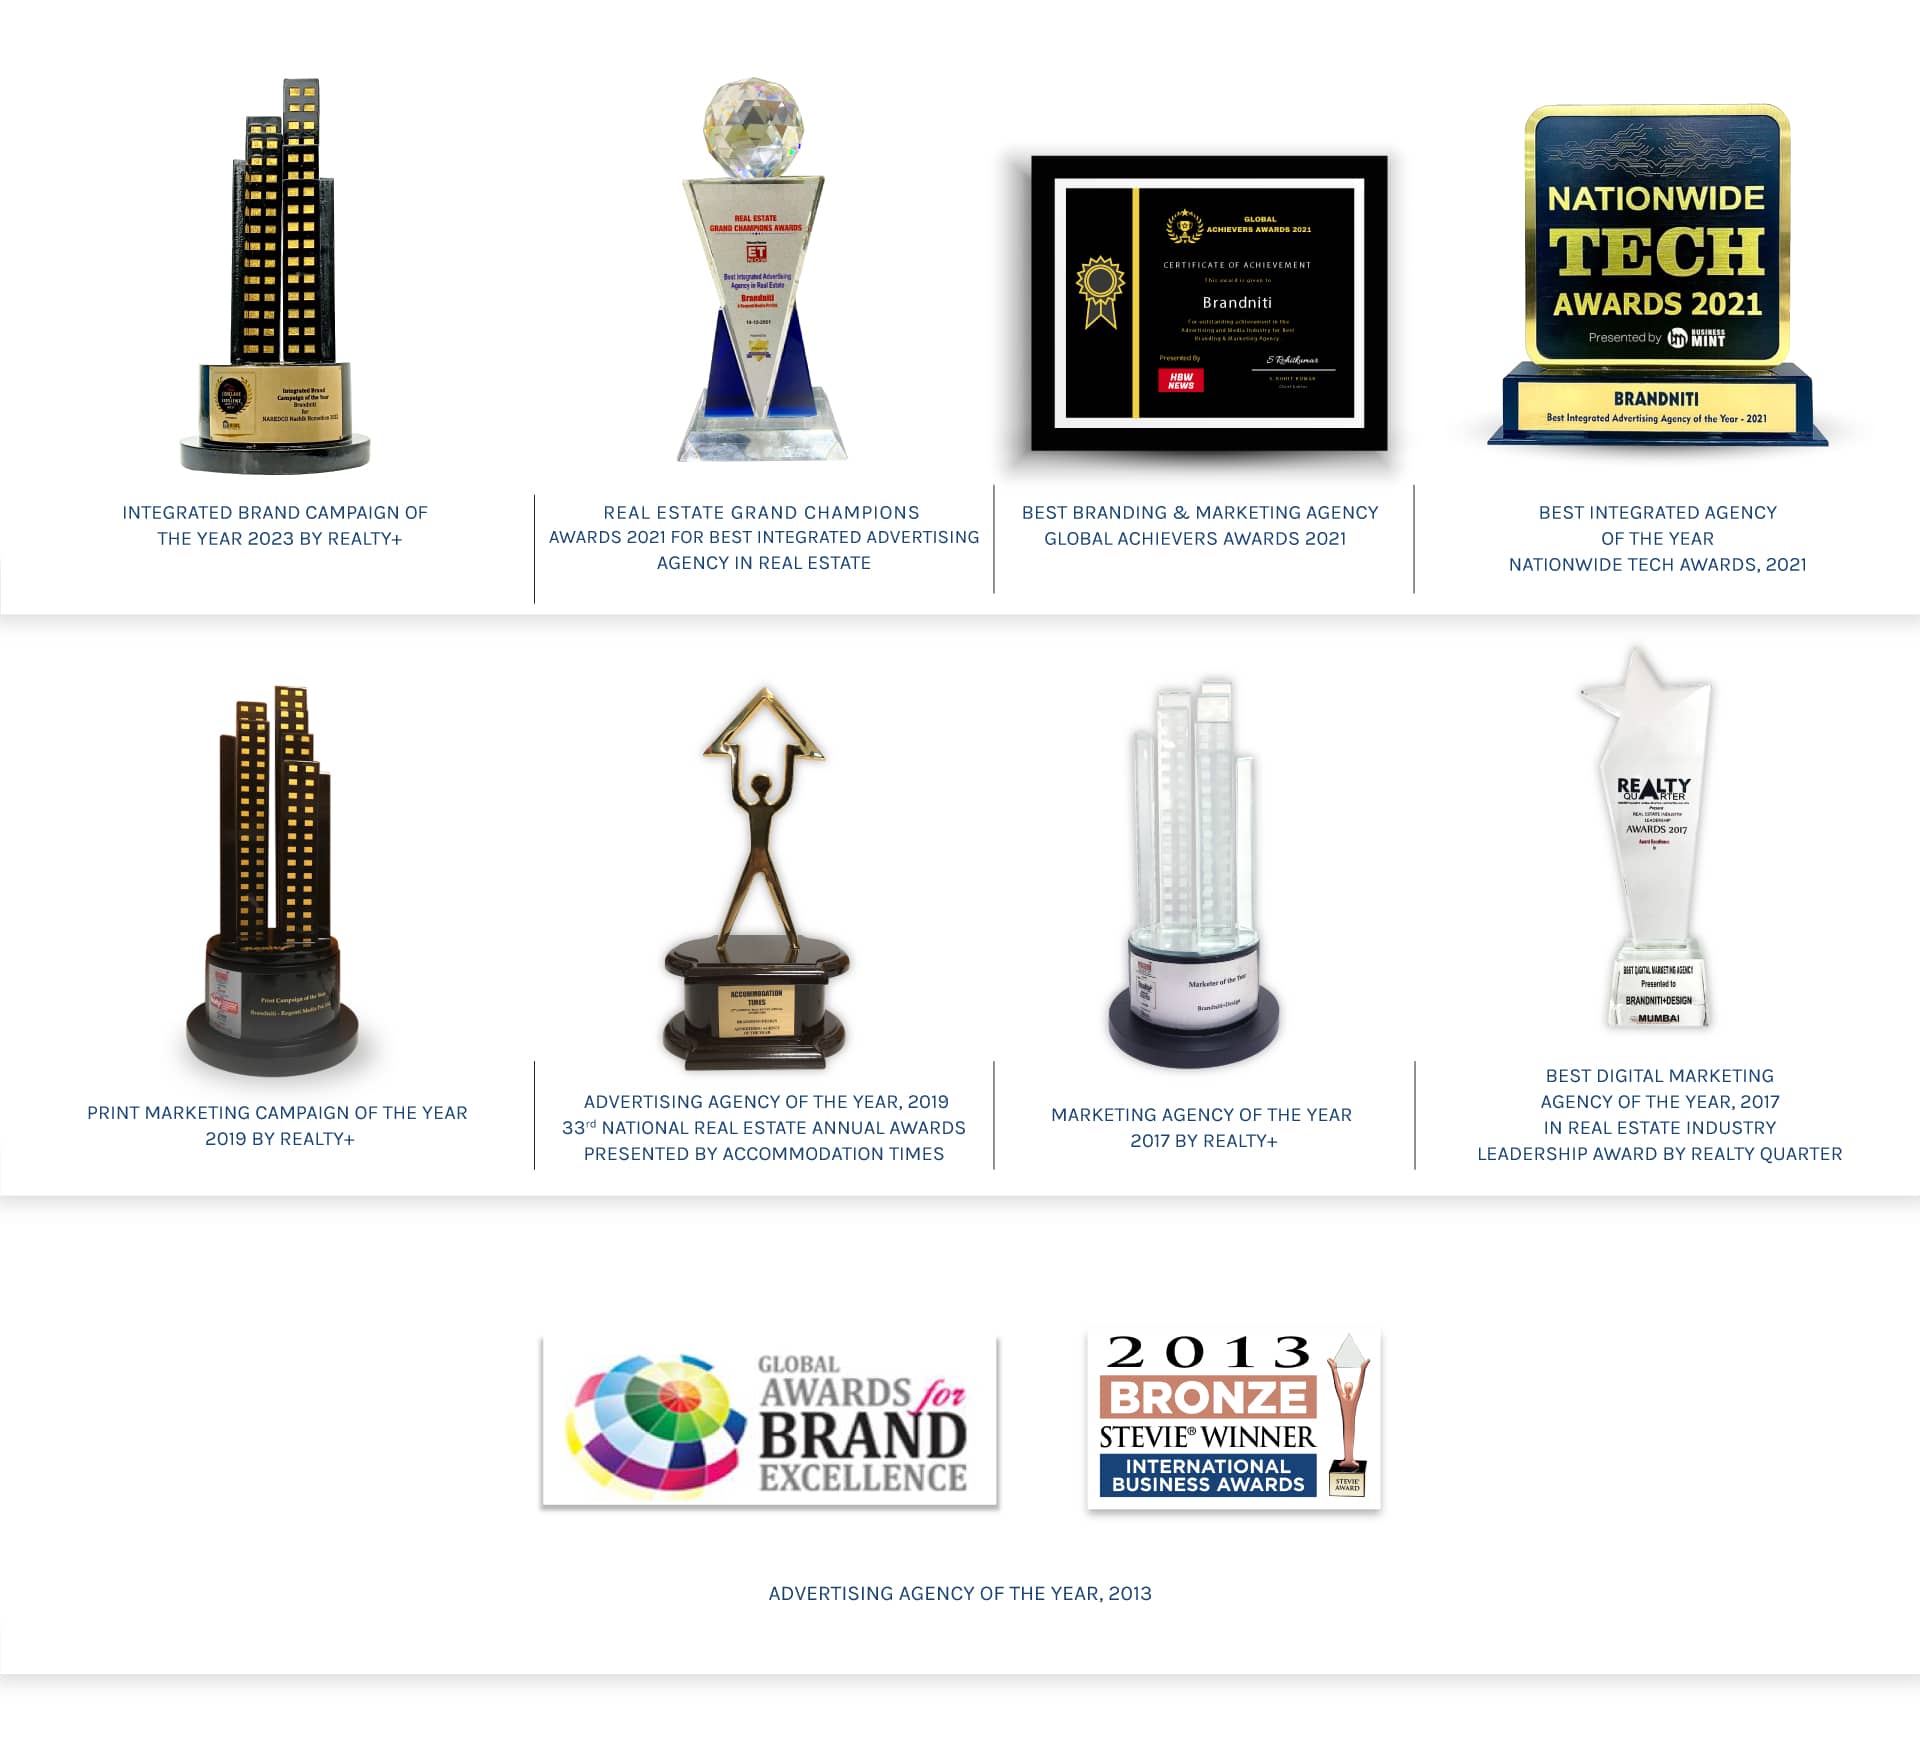 Brandniti-Excellence-Awards